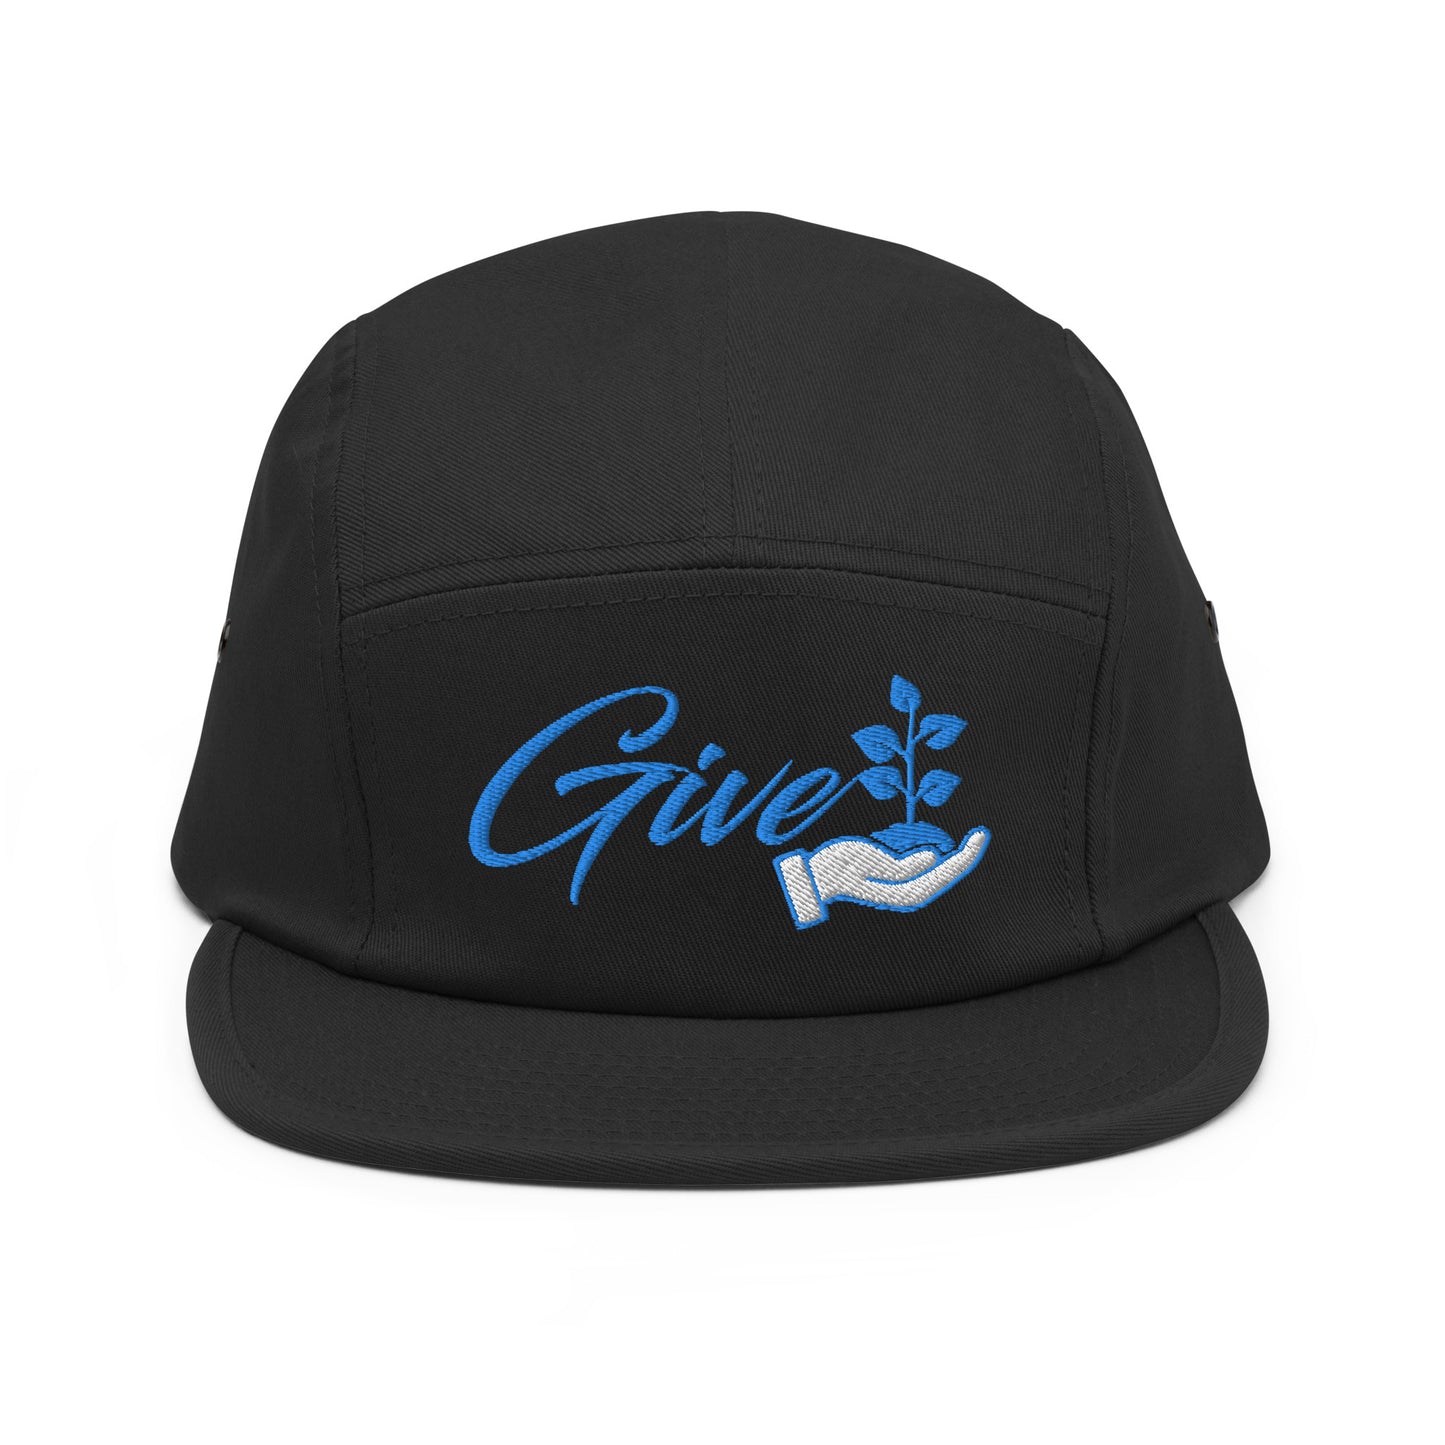 Give Foundation 5 Panel Hat (Aqua)